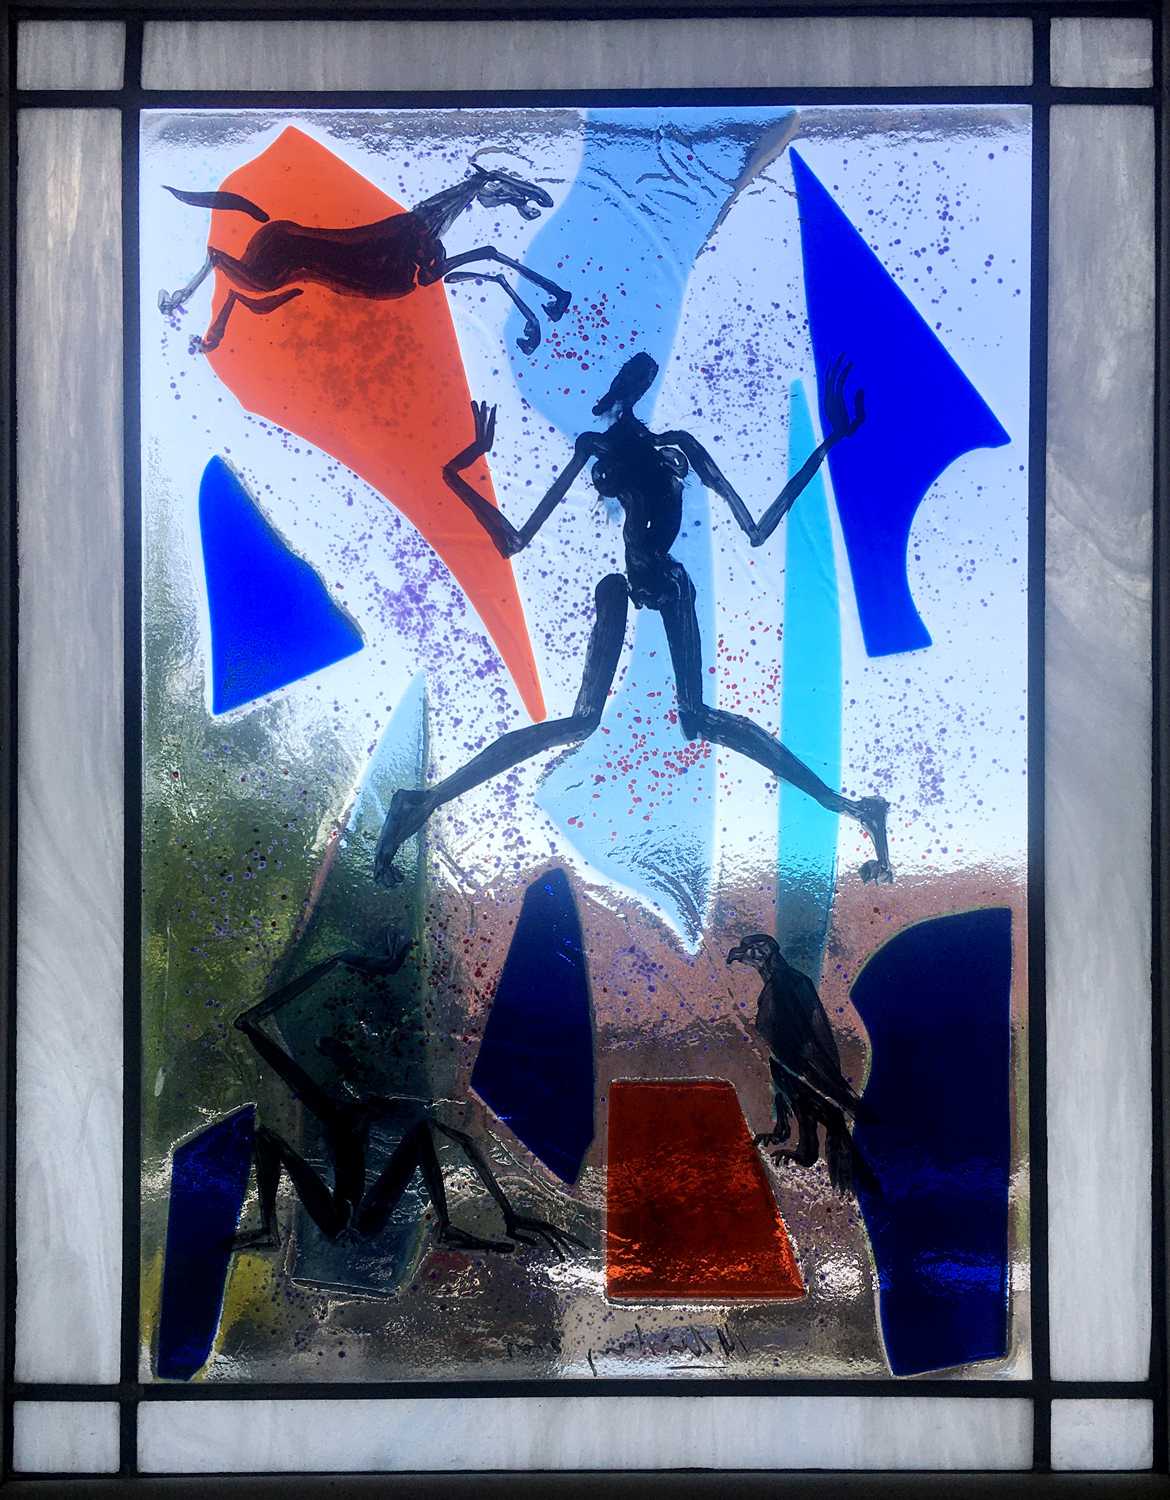 Glasbild-ca-120-x-80-cm,-Haus-Funk,-2000,-glasstudio-Funk,-Eislingen